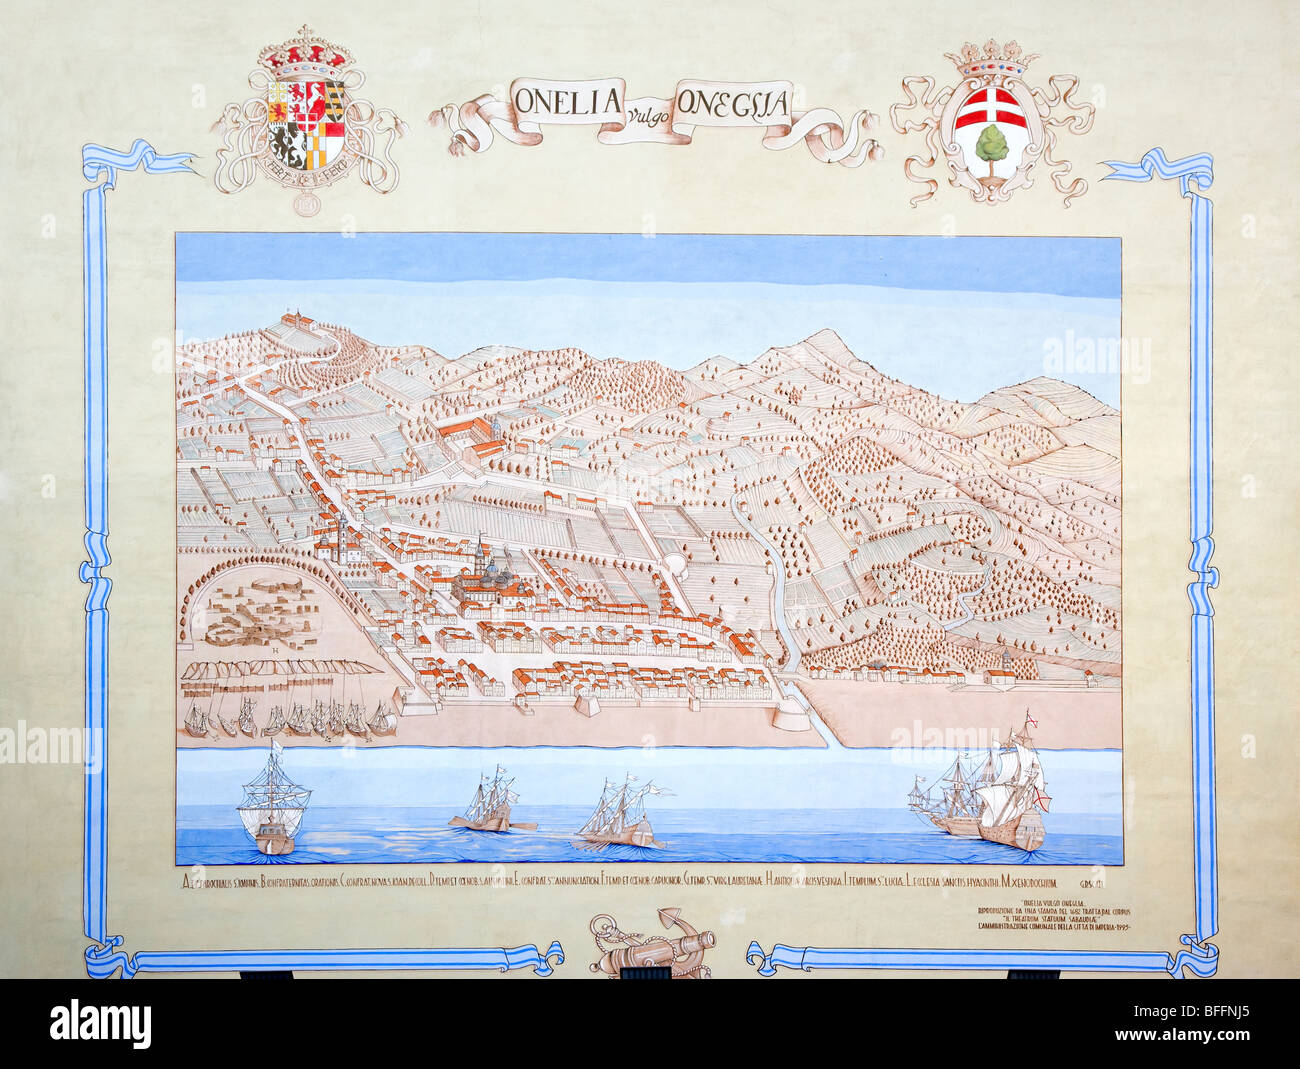 Antique map of Onelia, Imperia, liguria, Italy Stock Photo